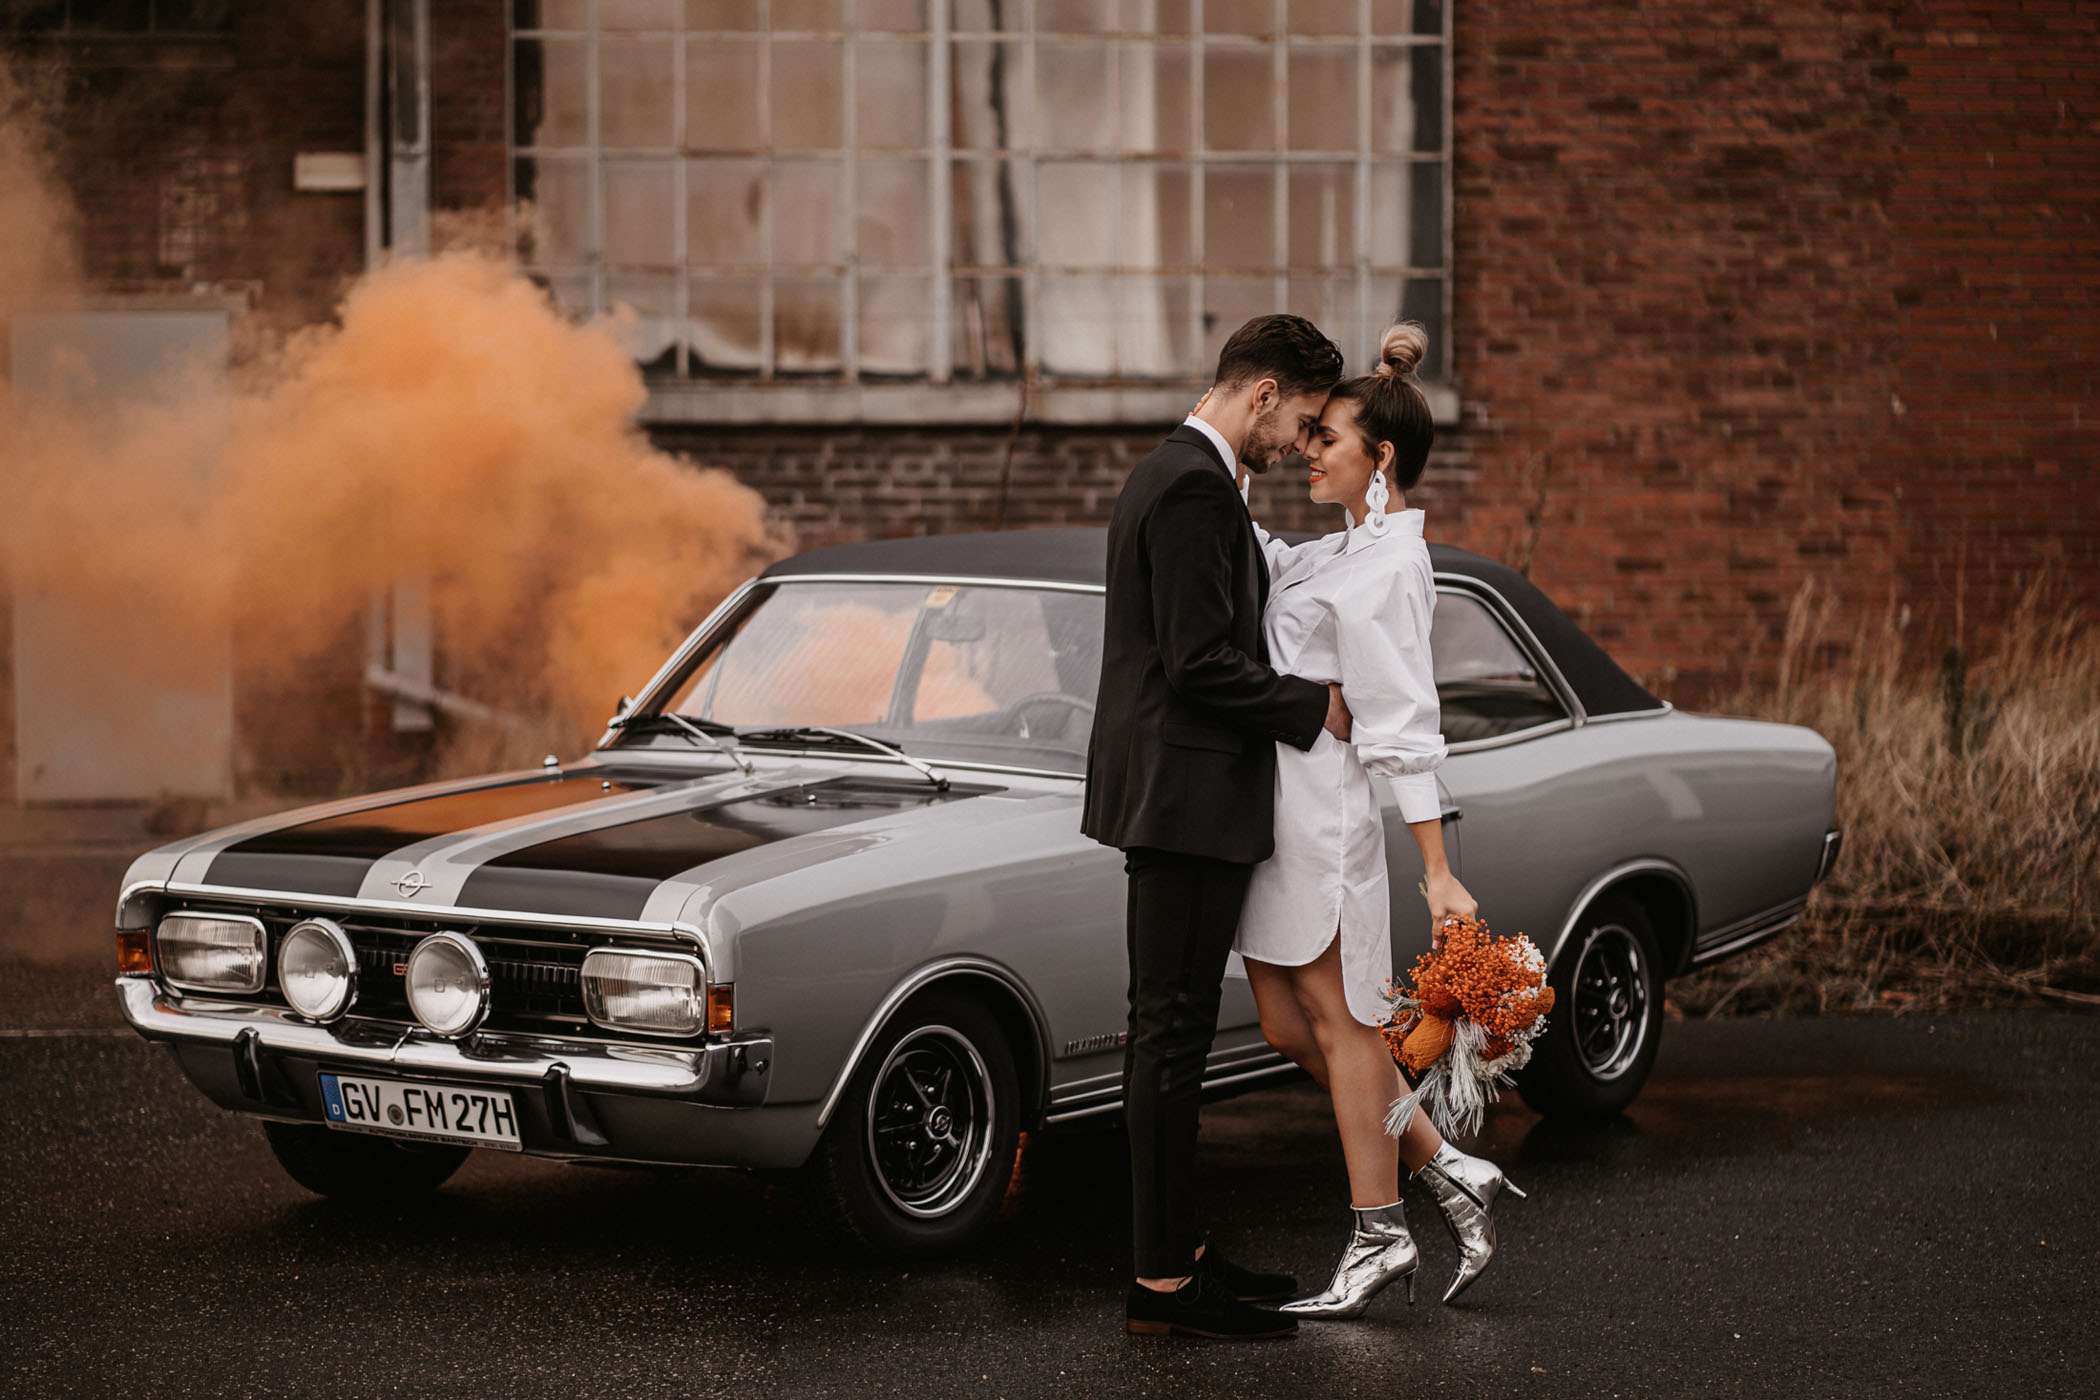 Orange wedding smoke bomb and vintage car